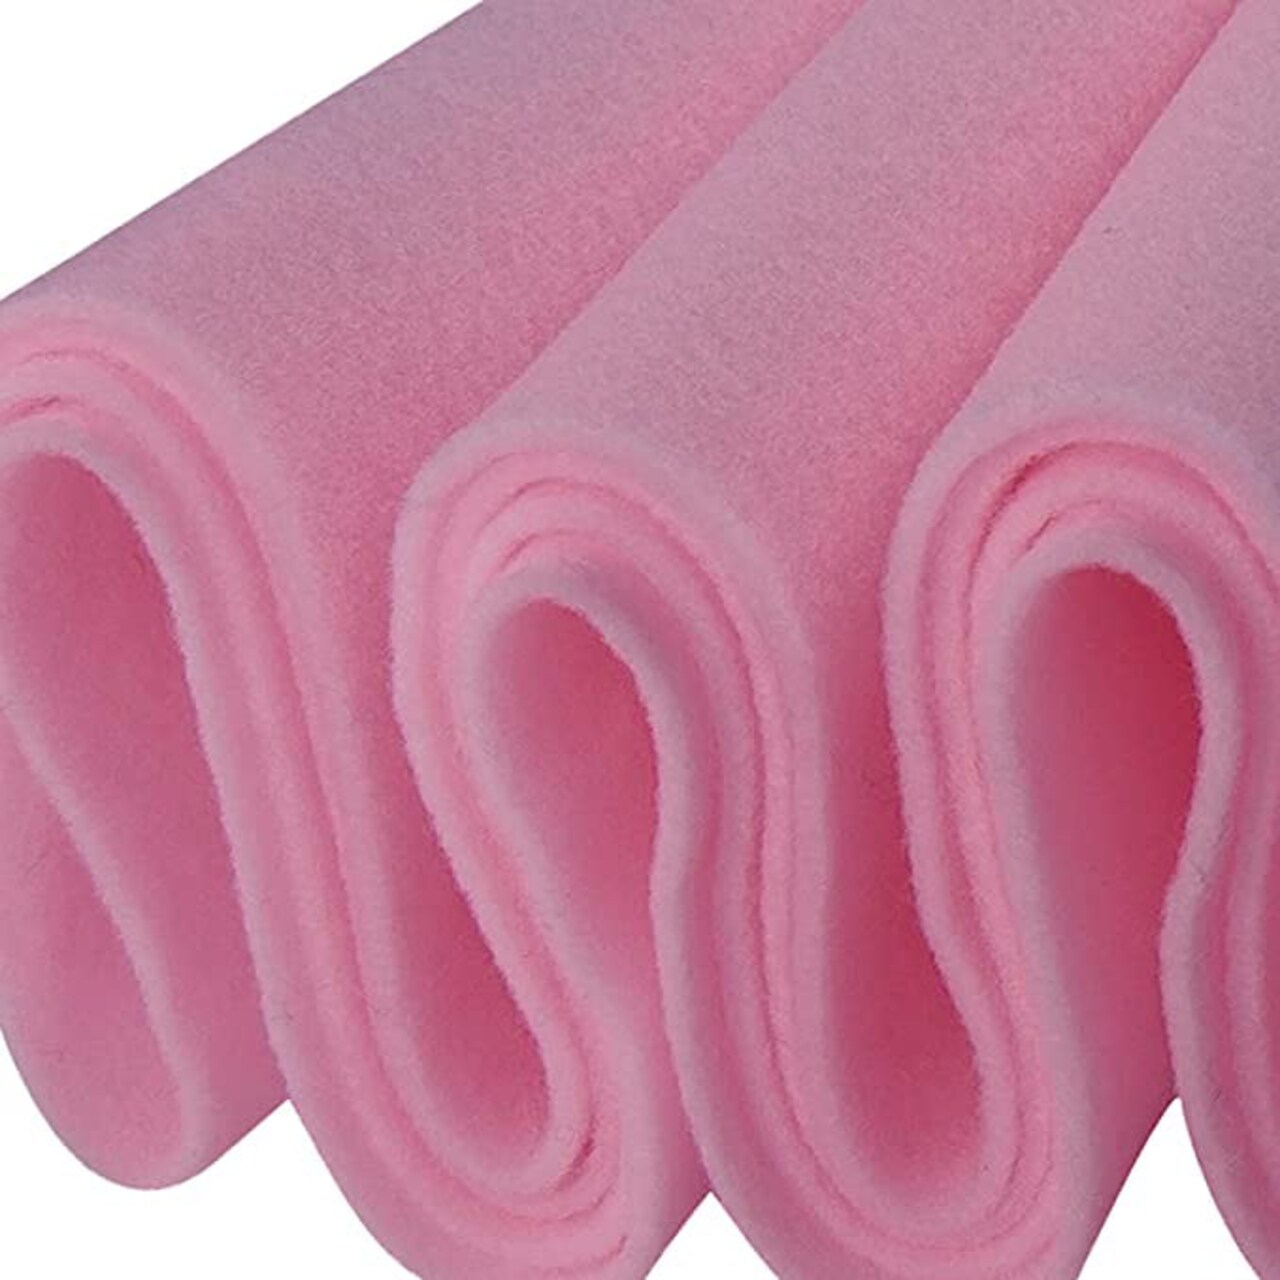 FabricLA Craft Felt Fabric - 36 X 36 Inch Wide & 1.6mm Thick Felt Fabric  - Use This Soft Felt for Crafts - Felt Material Pack - Baby Pink